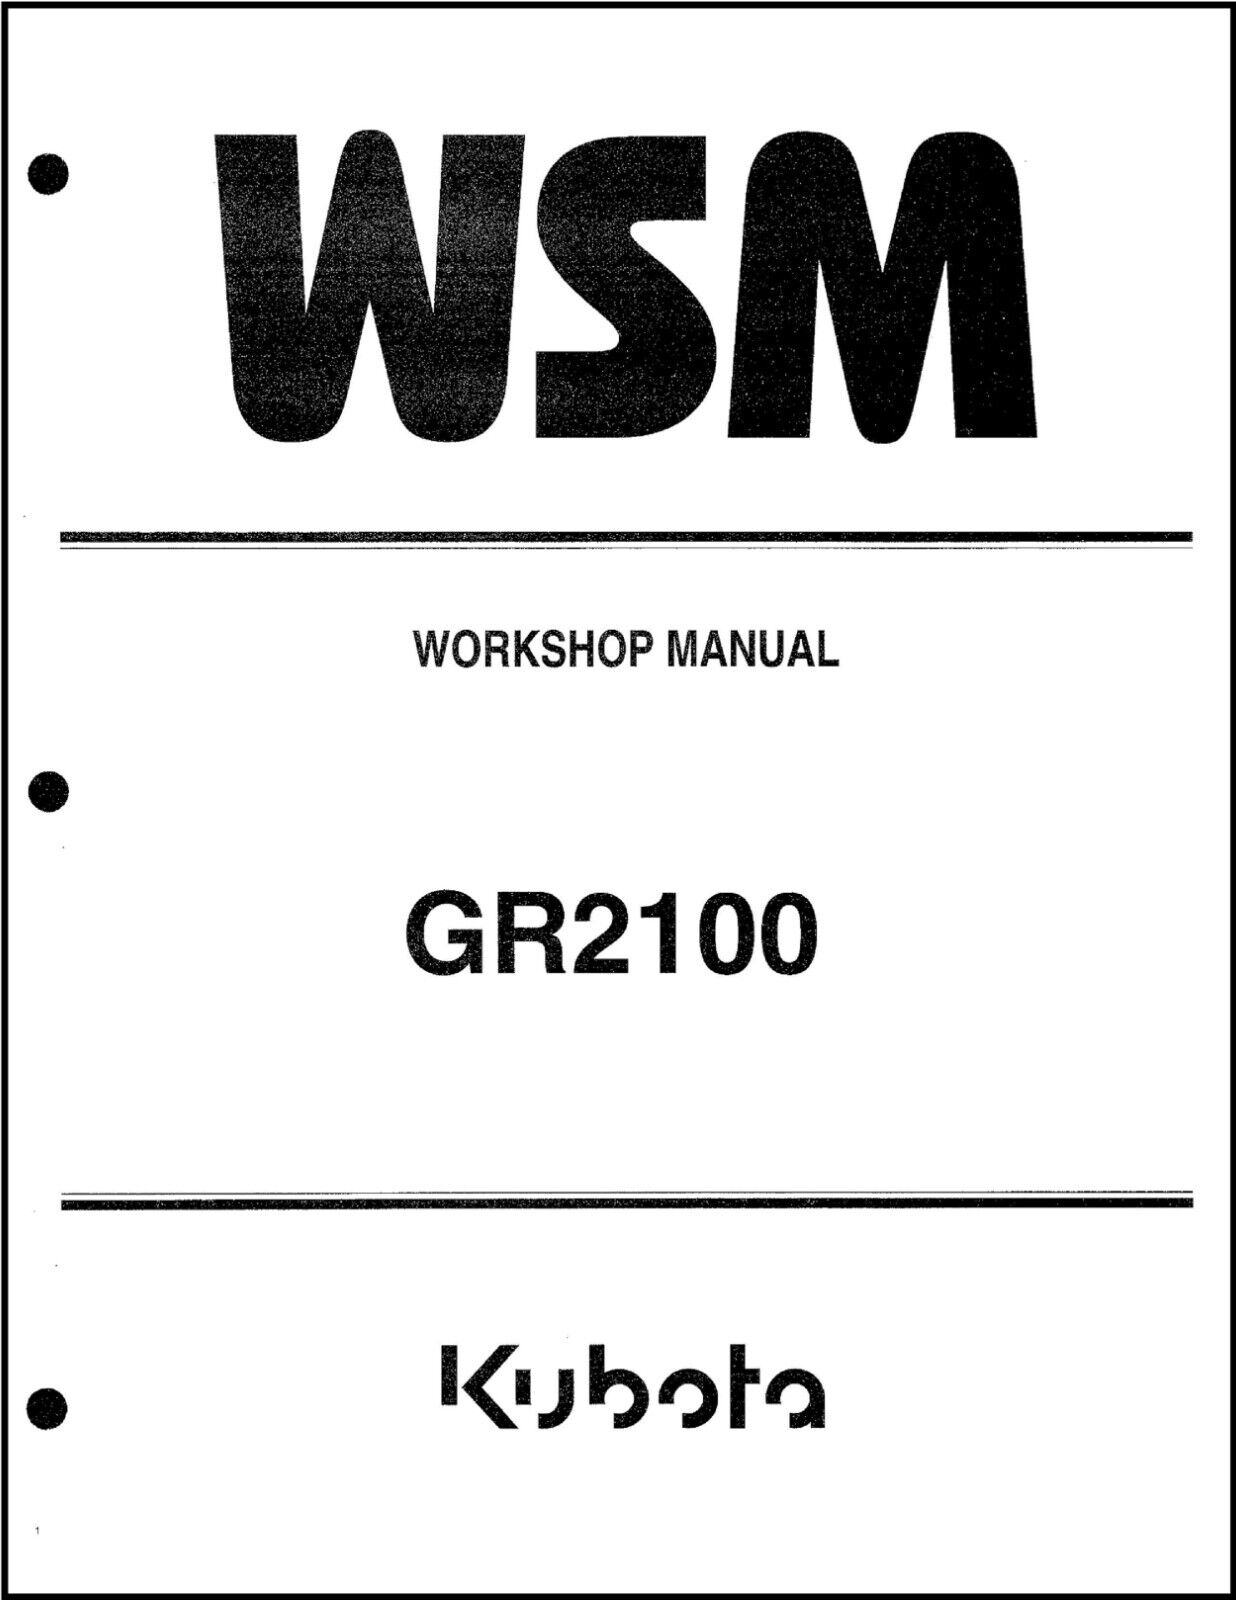 Tractor Mower WSM Service Workshop Manual GR2100 Kubota (GR2100EC) Ride-On